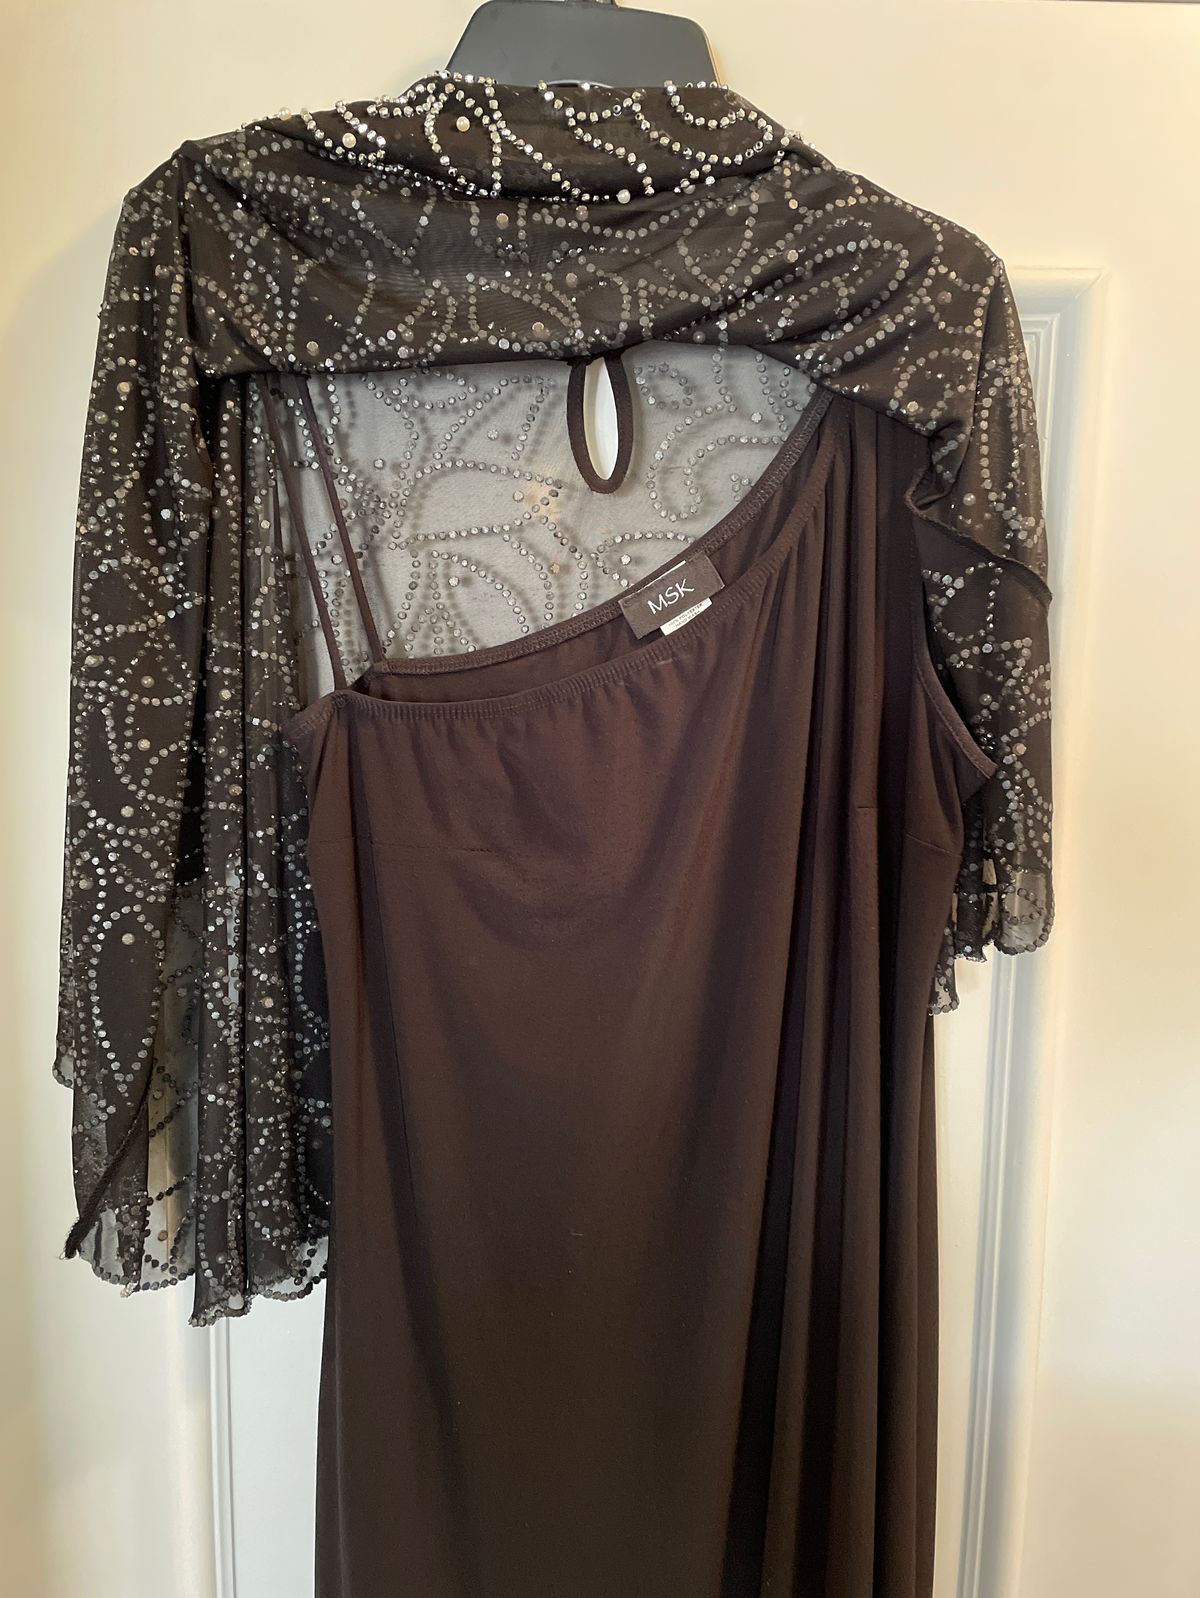 Style 3013451D MSK Size L One Shoulder Black A-line Dress on Queenly